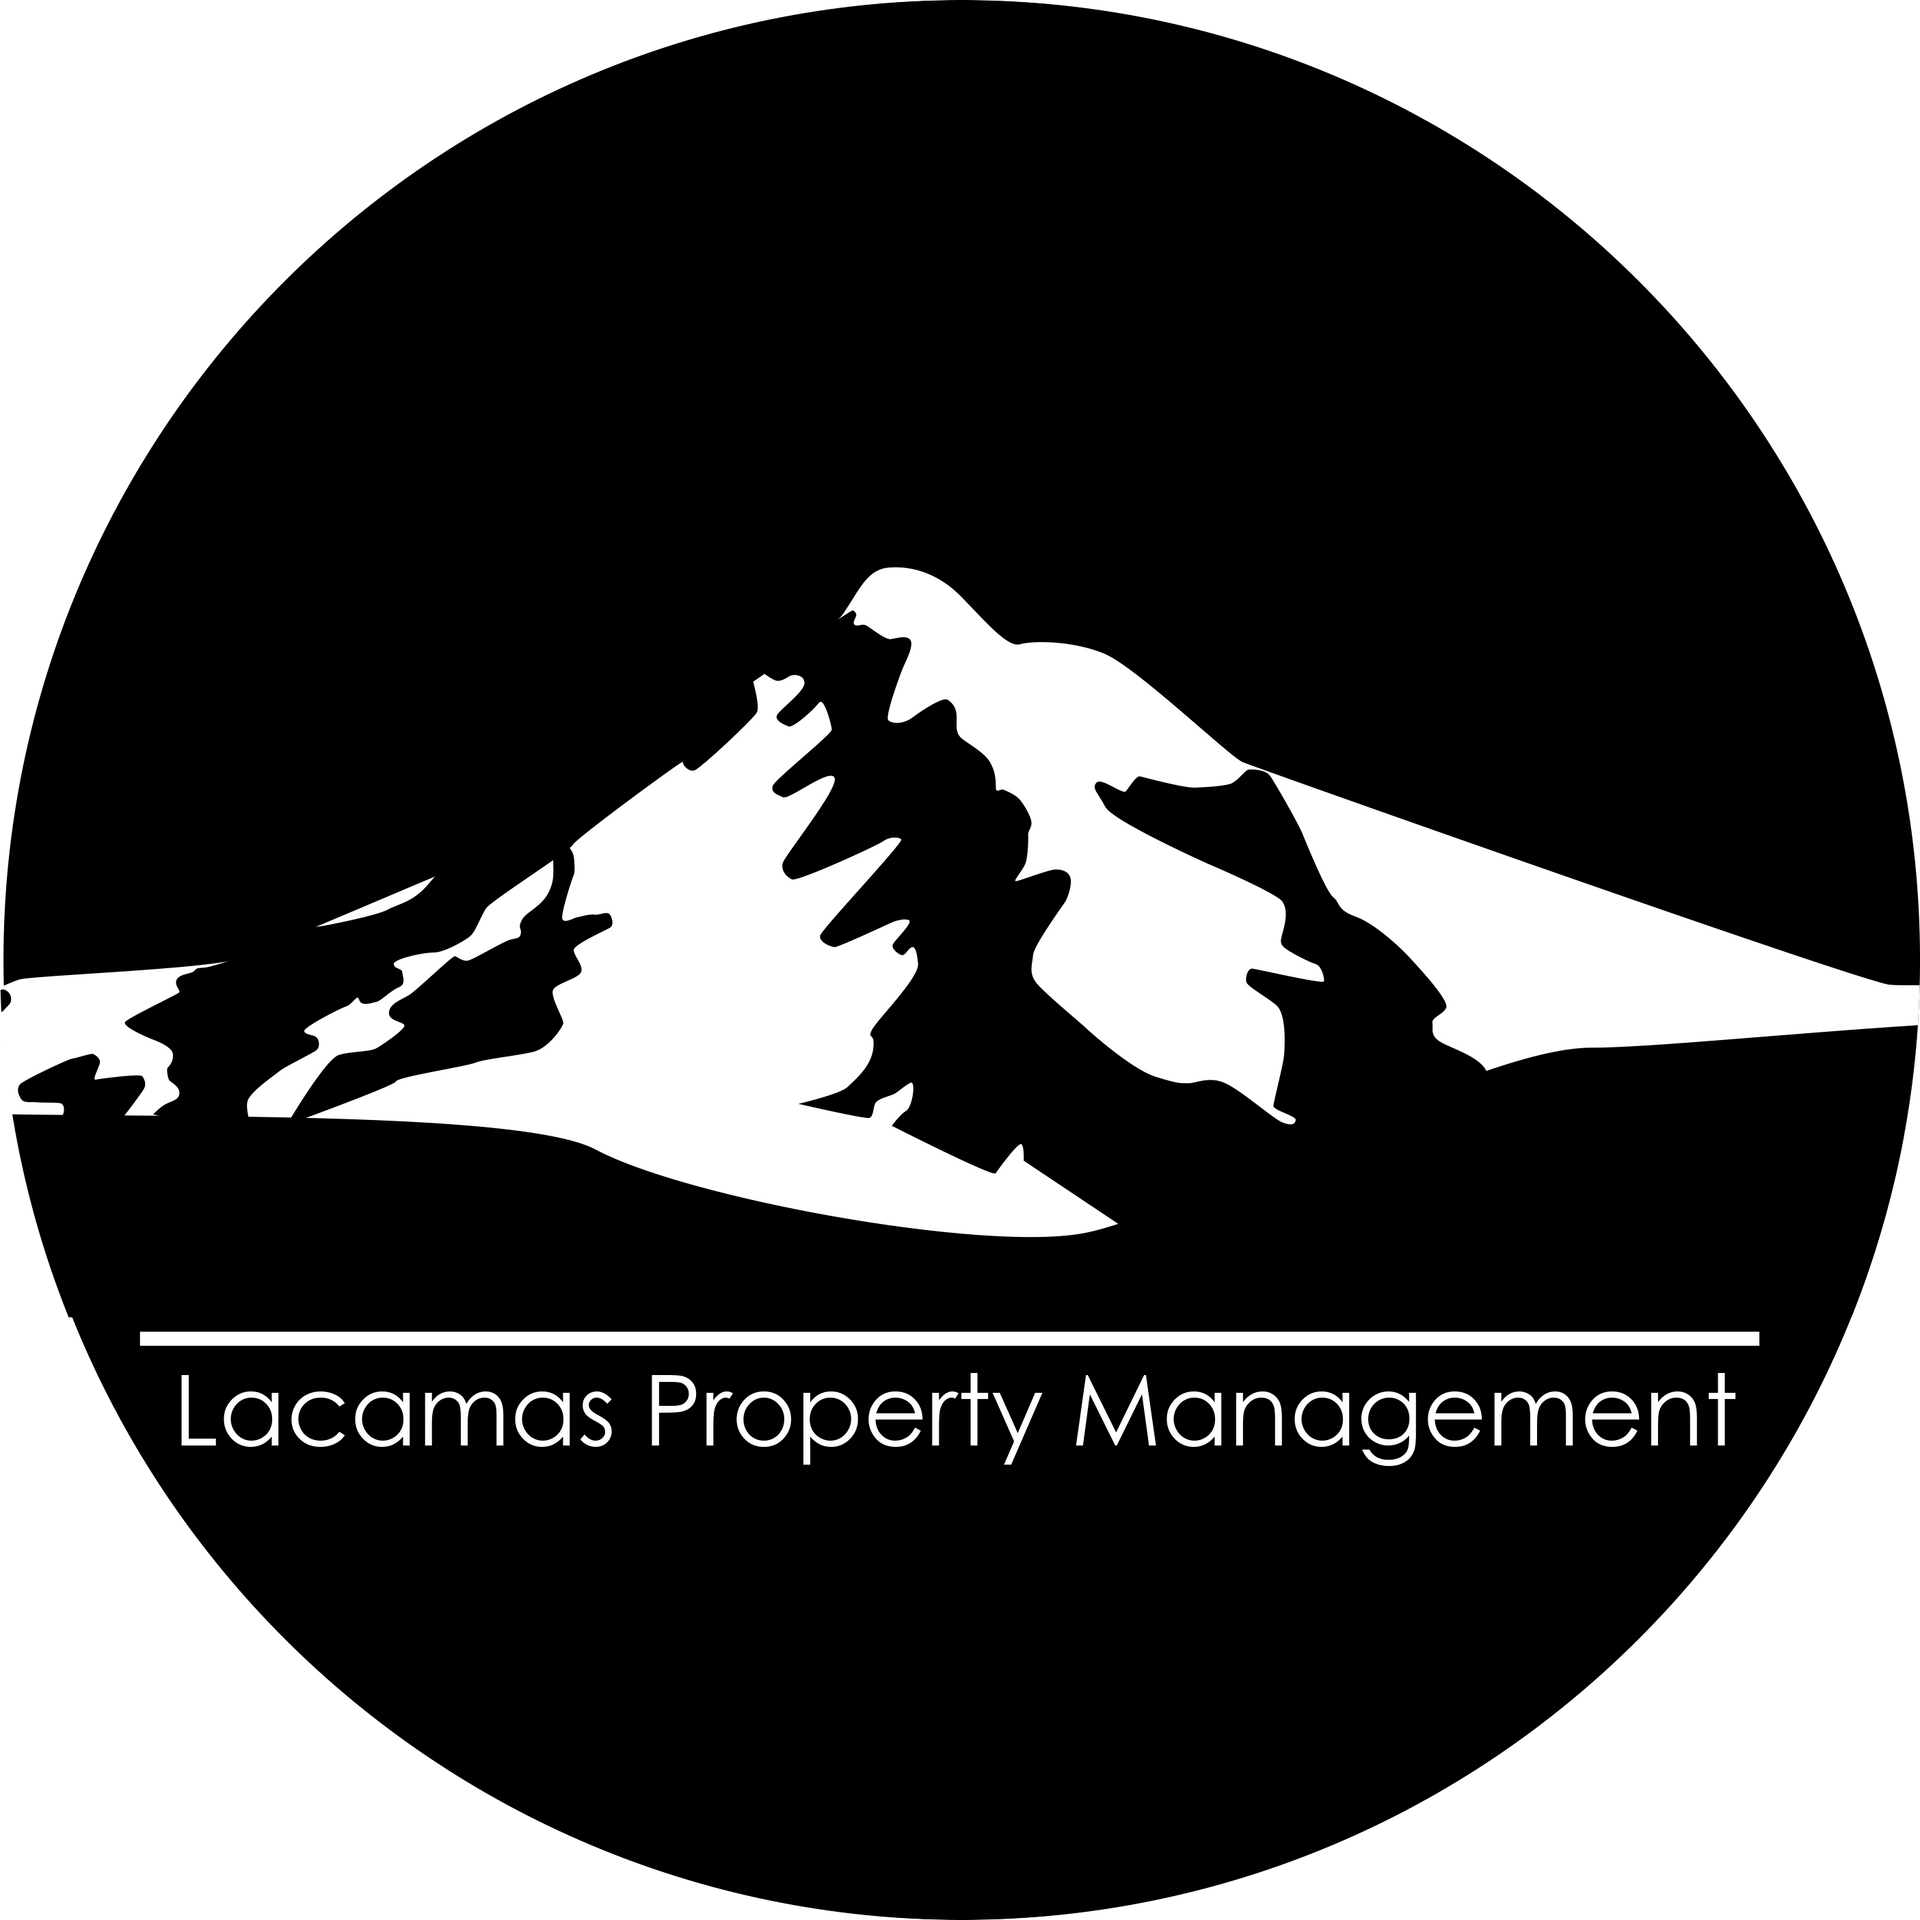 Lacamas Property Management logo